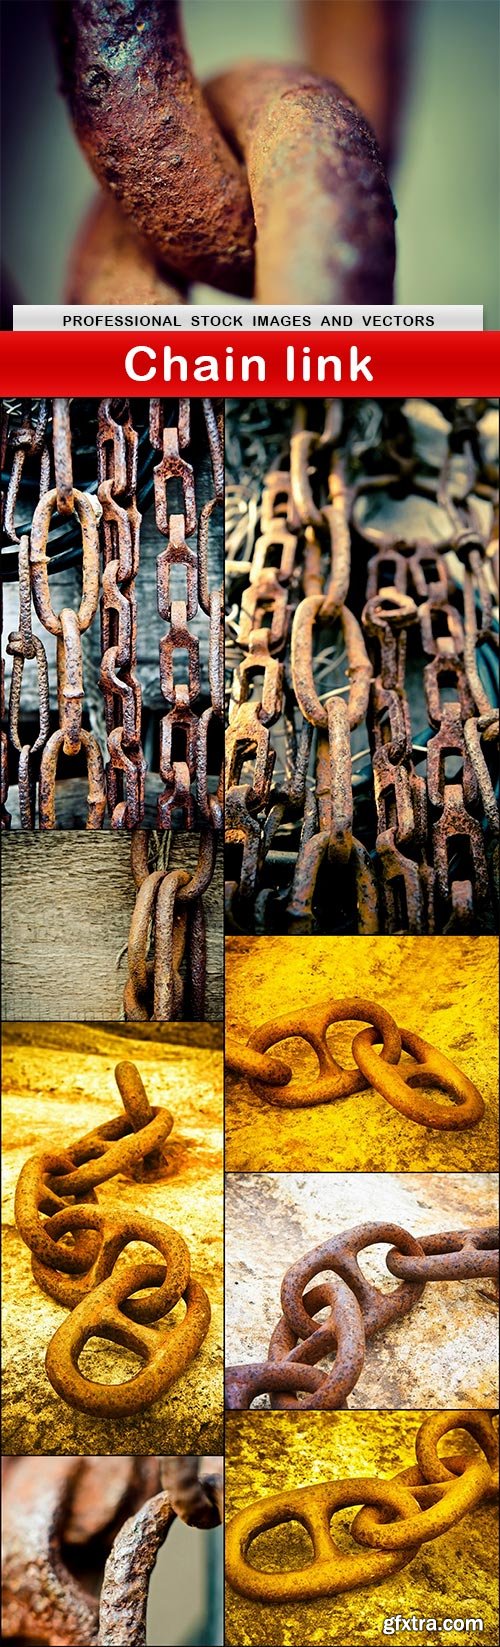 Chain link - 9 UHQ JPEG